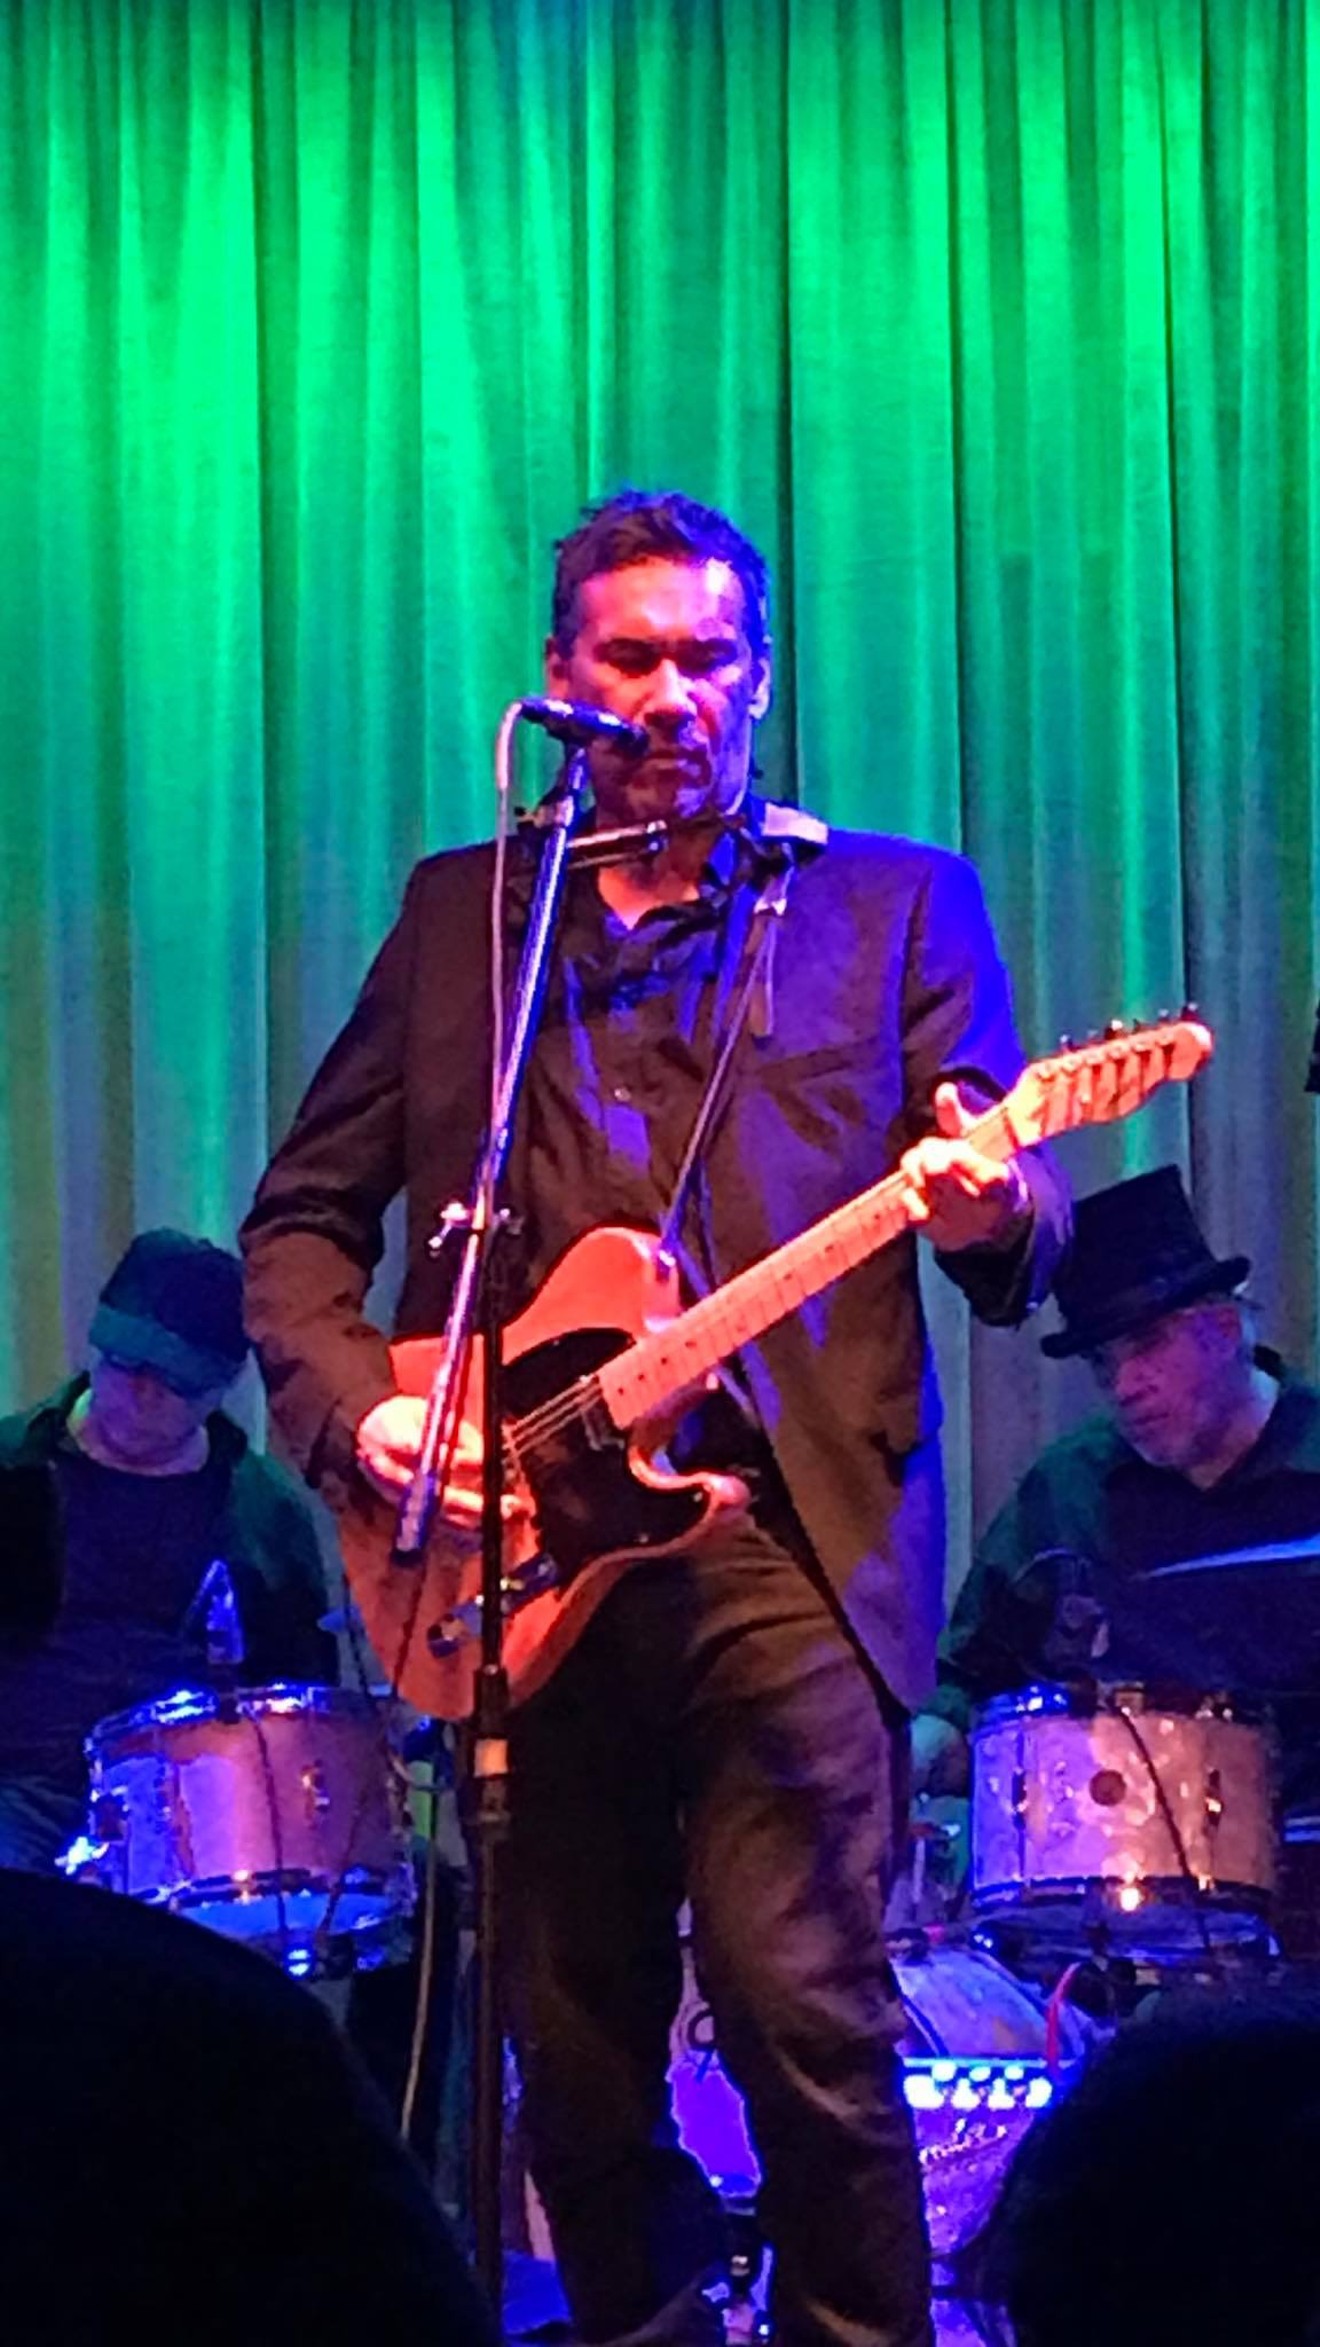 Joe Peña on stage at Crescent Ballroom.